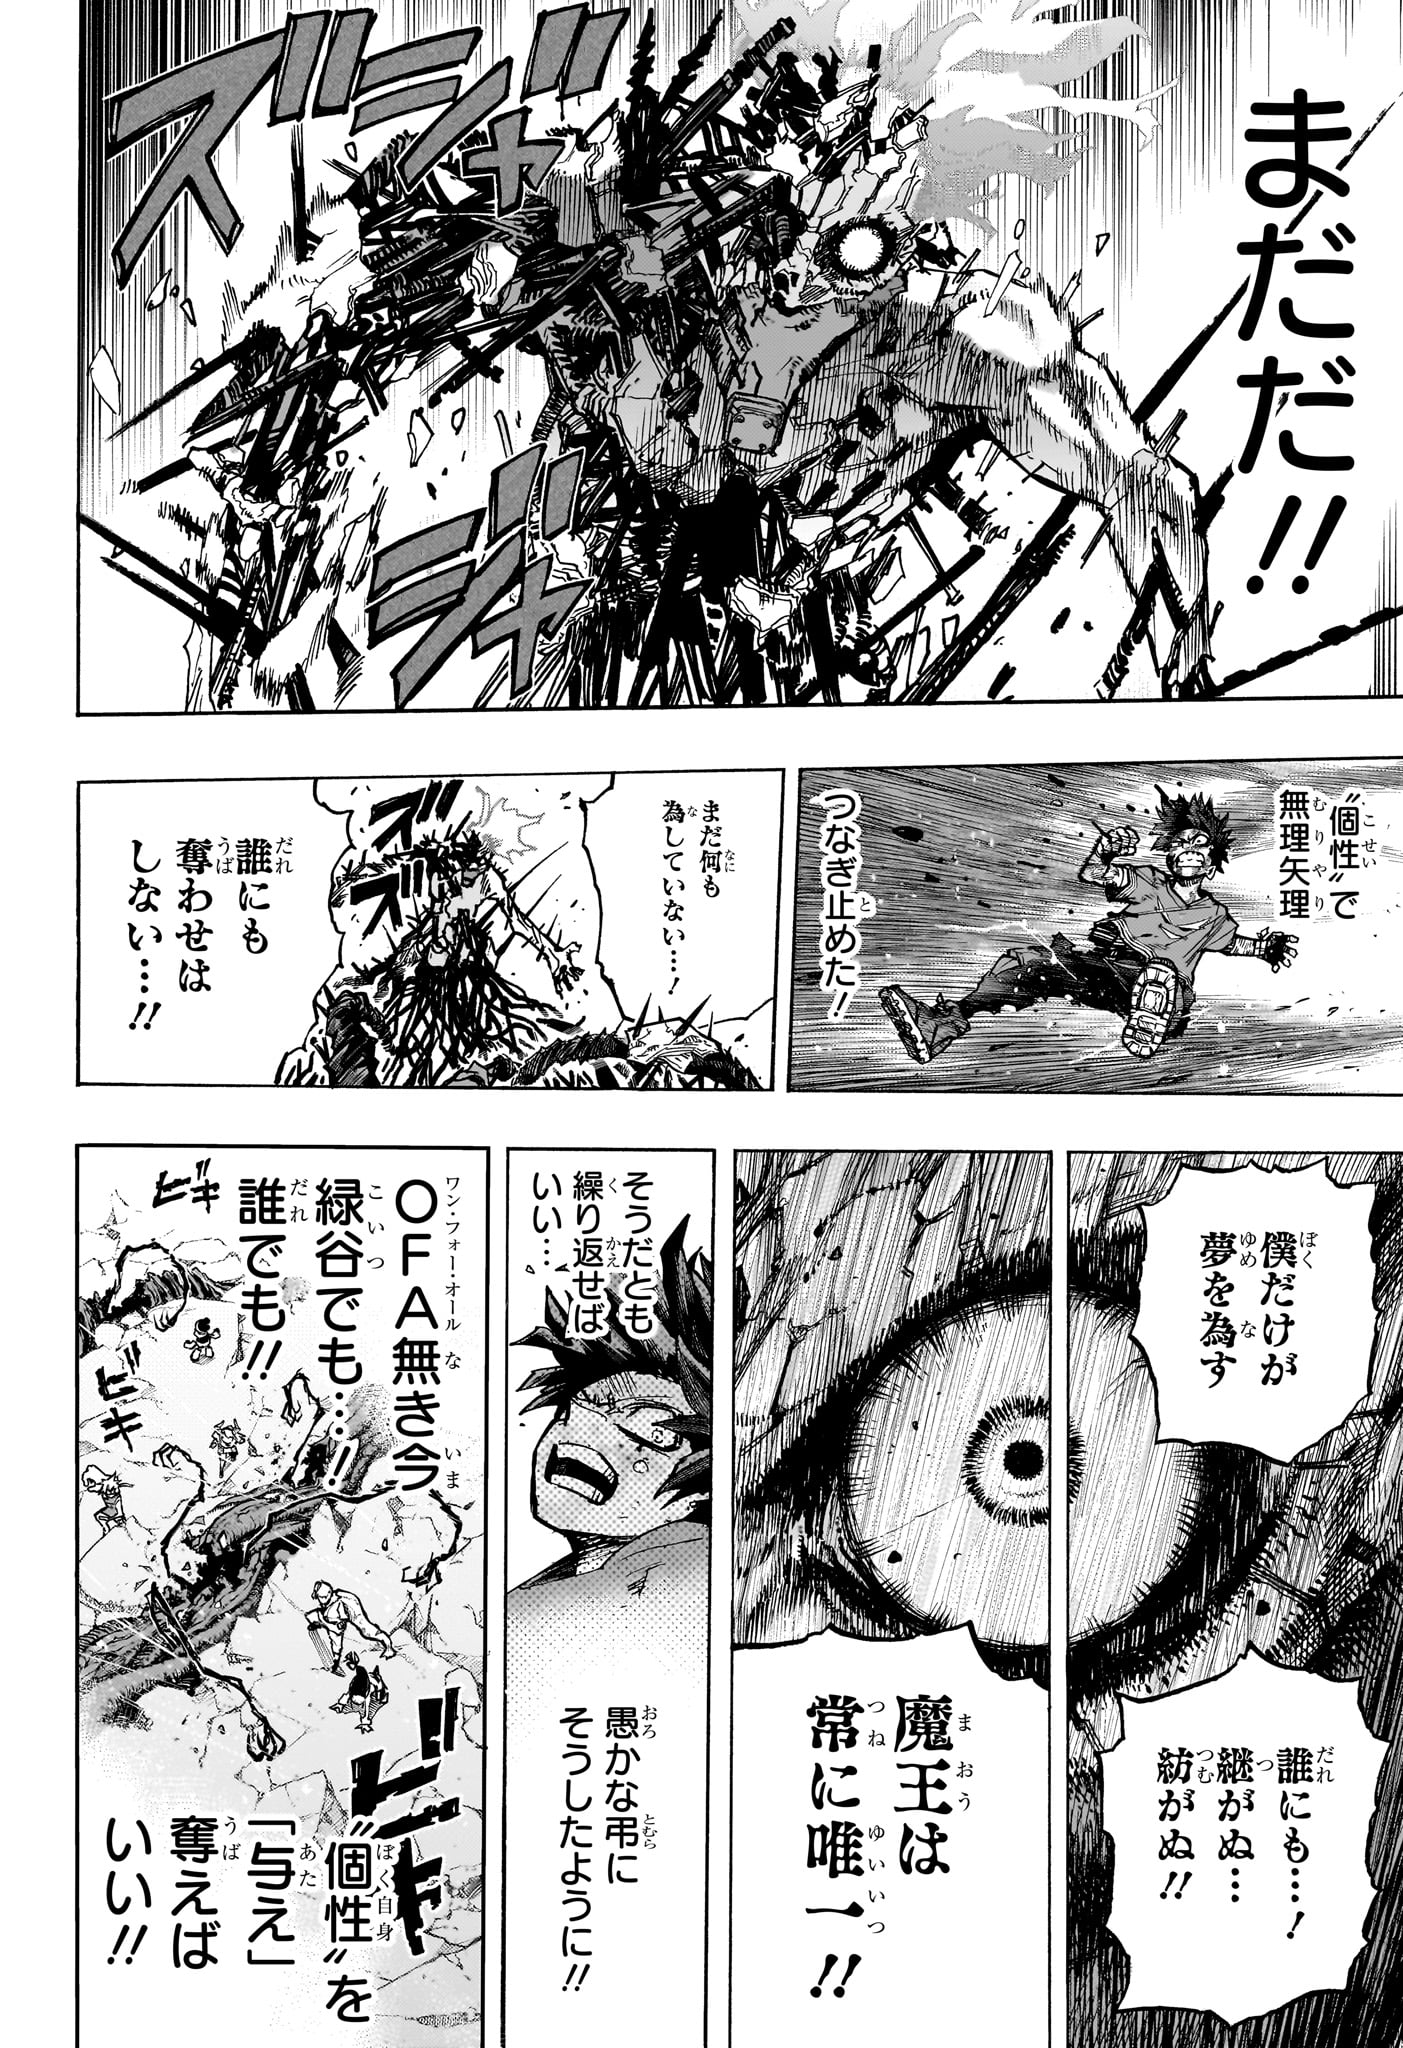 Boku no Hero Academia - Chapter 423 - Page 4